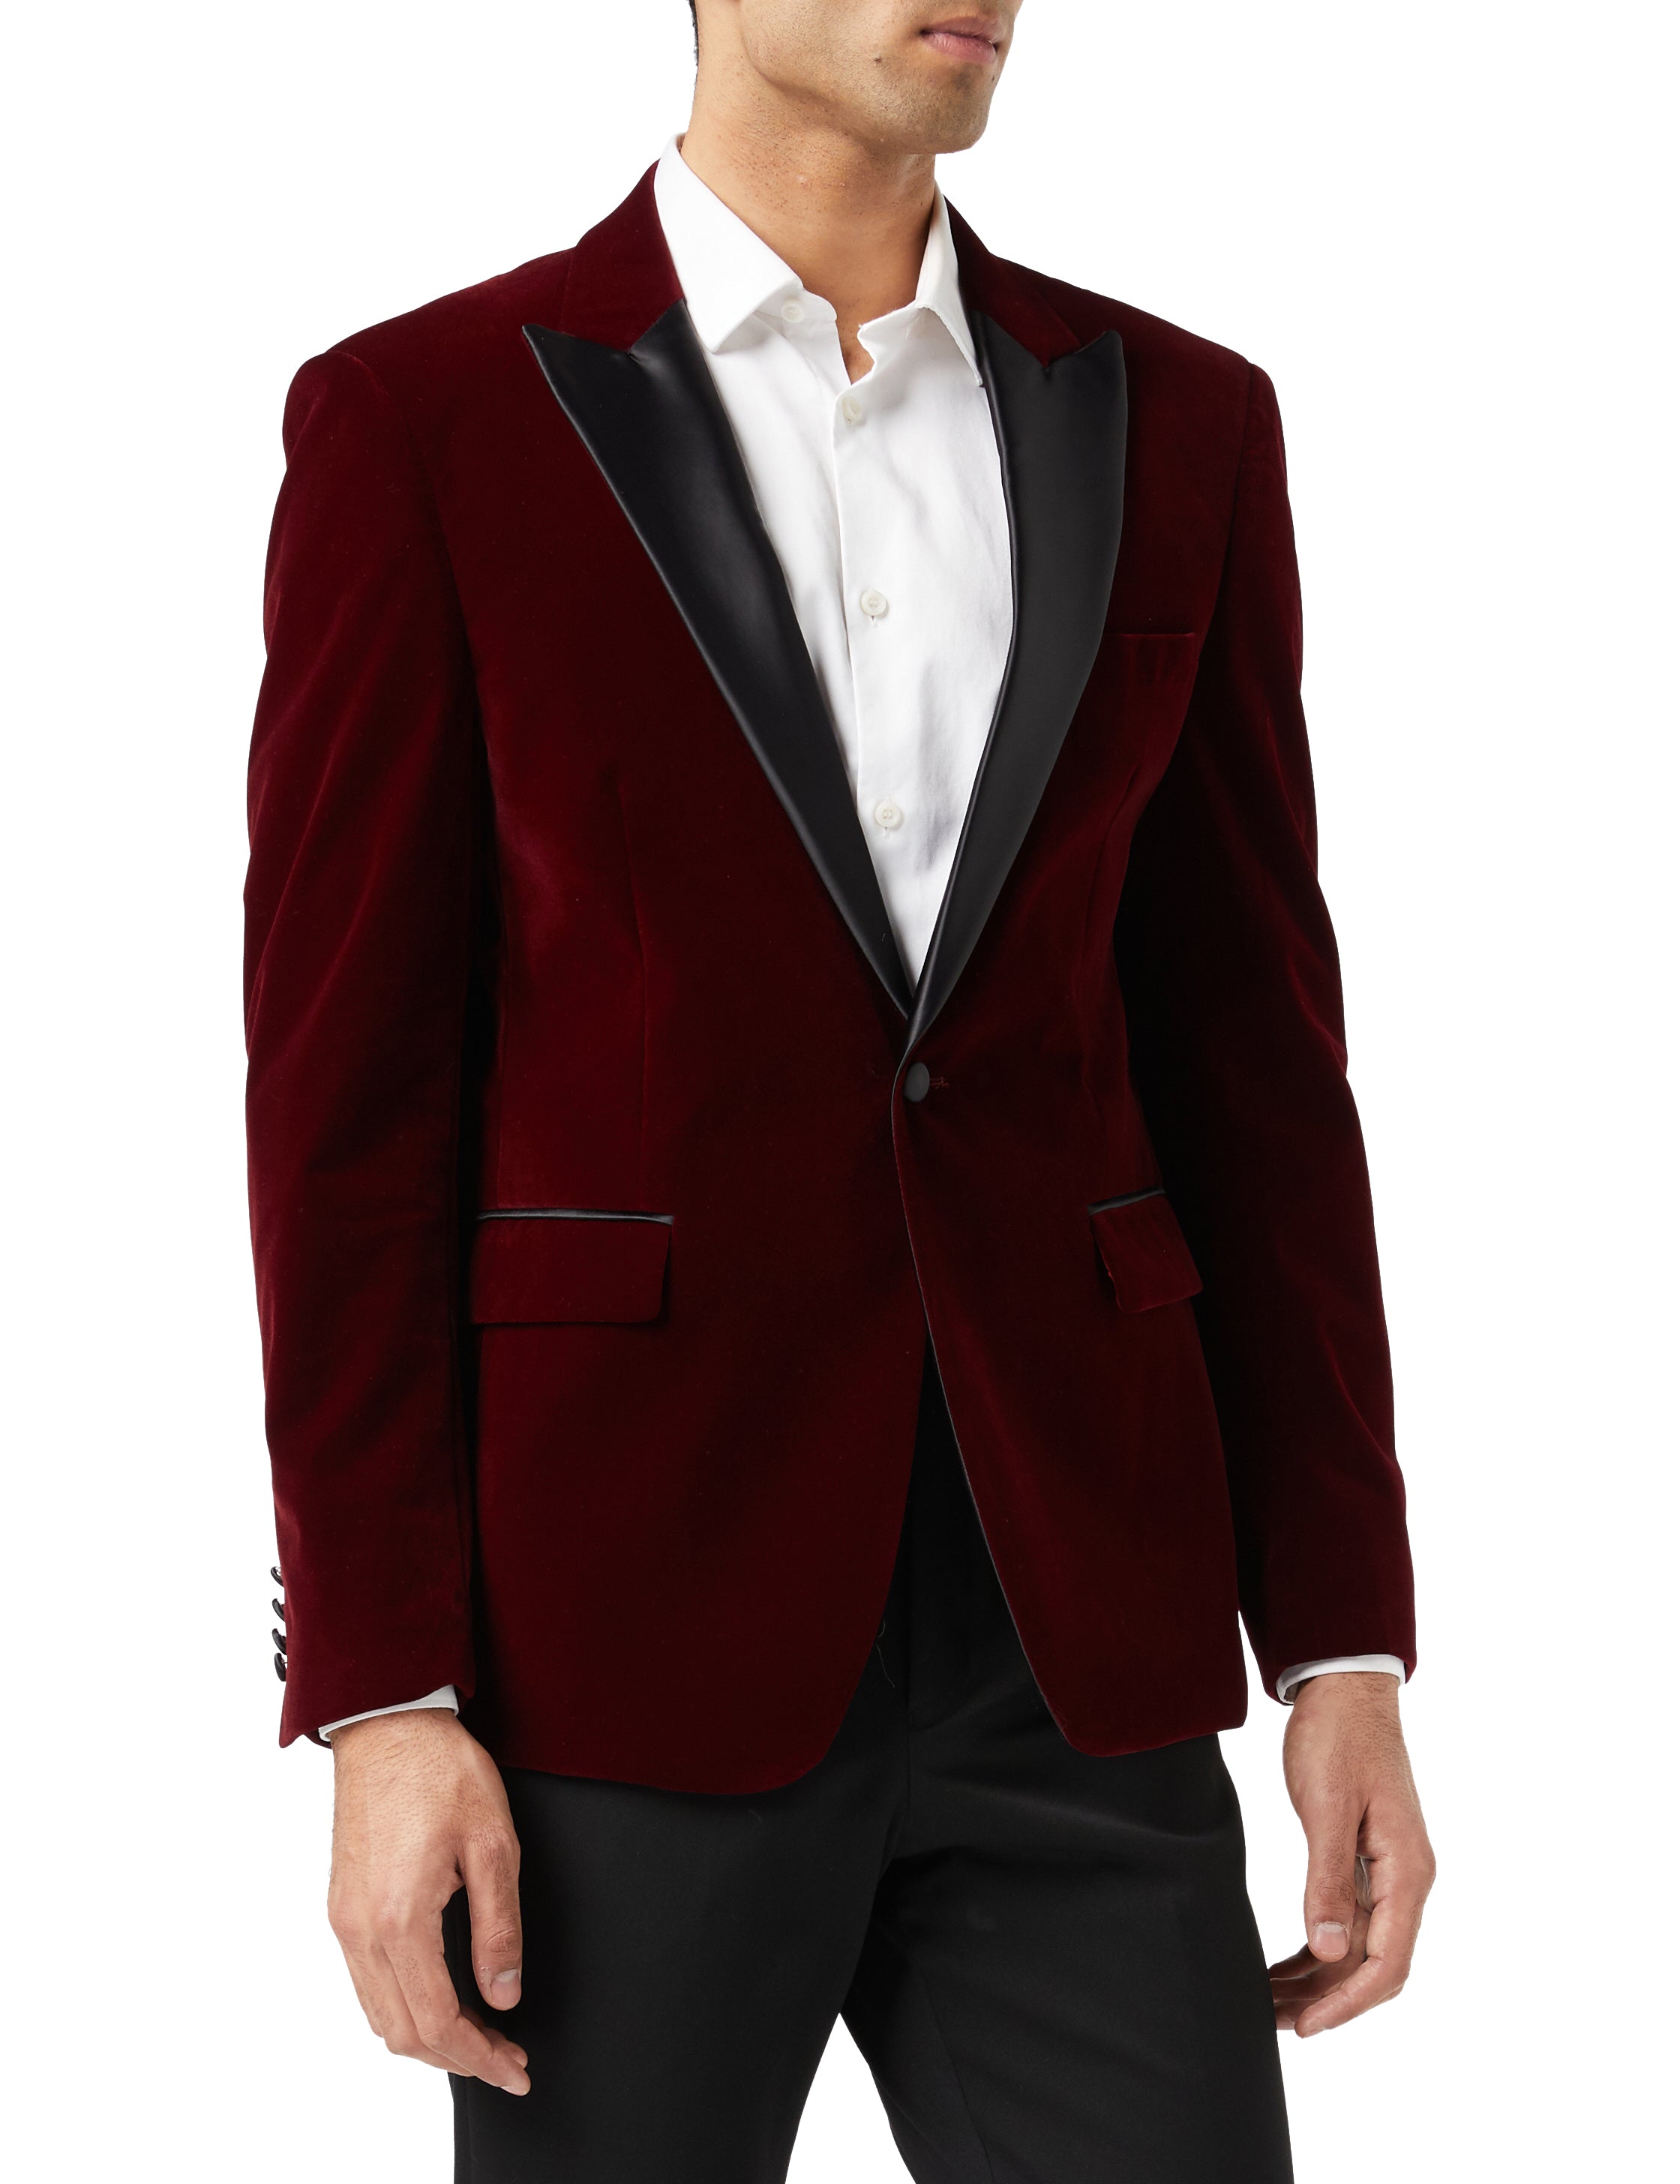 Mens Red Blazers | Smart Red Blazers in Tweed & Velvet | XPOSED